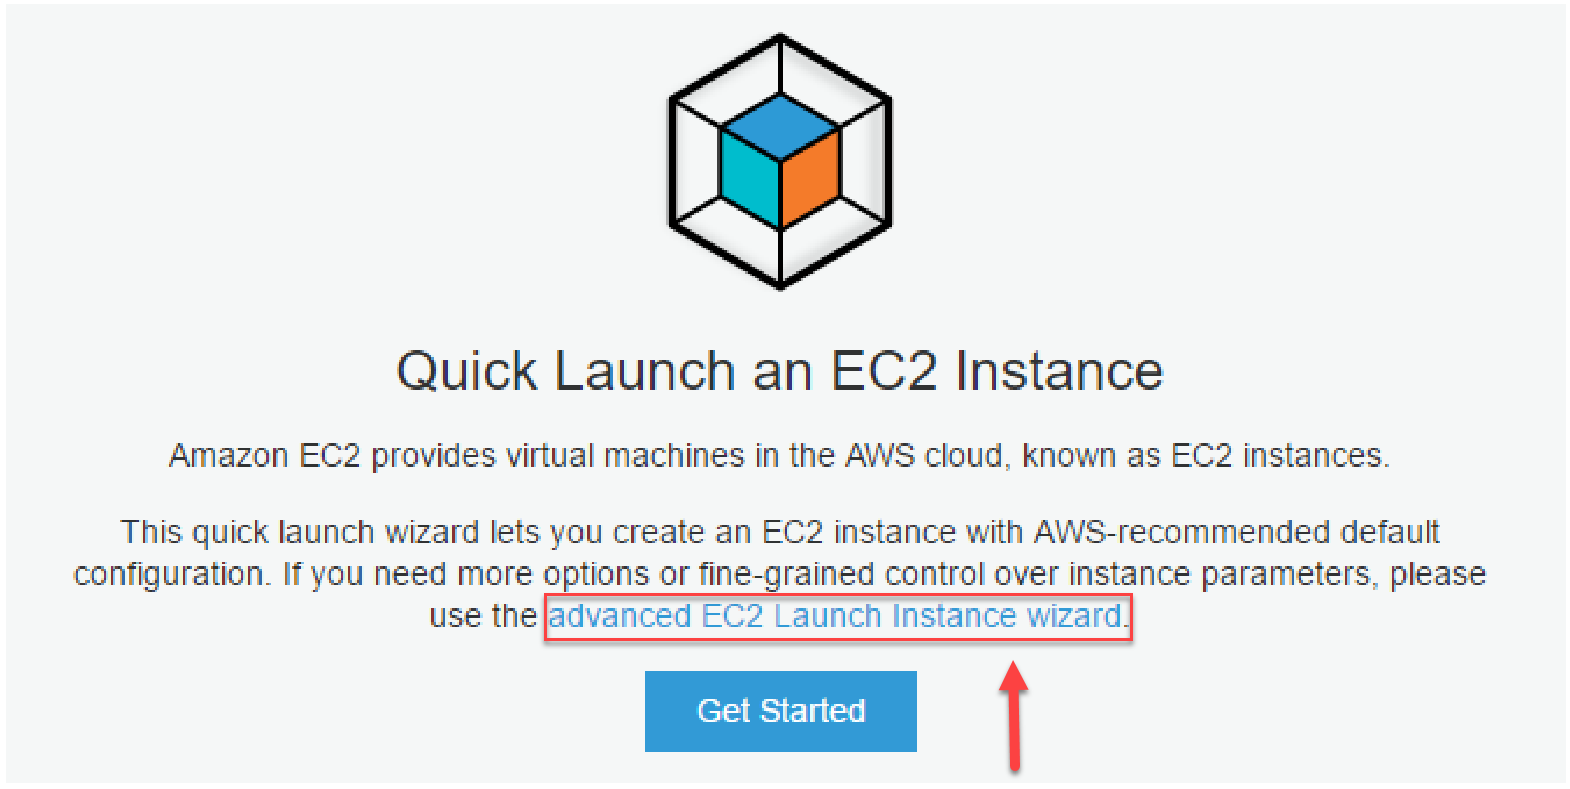 EC2 advnaced Launch instance wizard